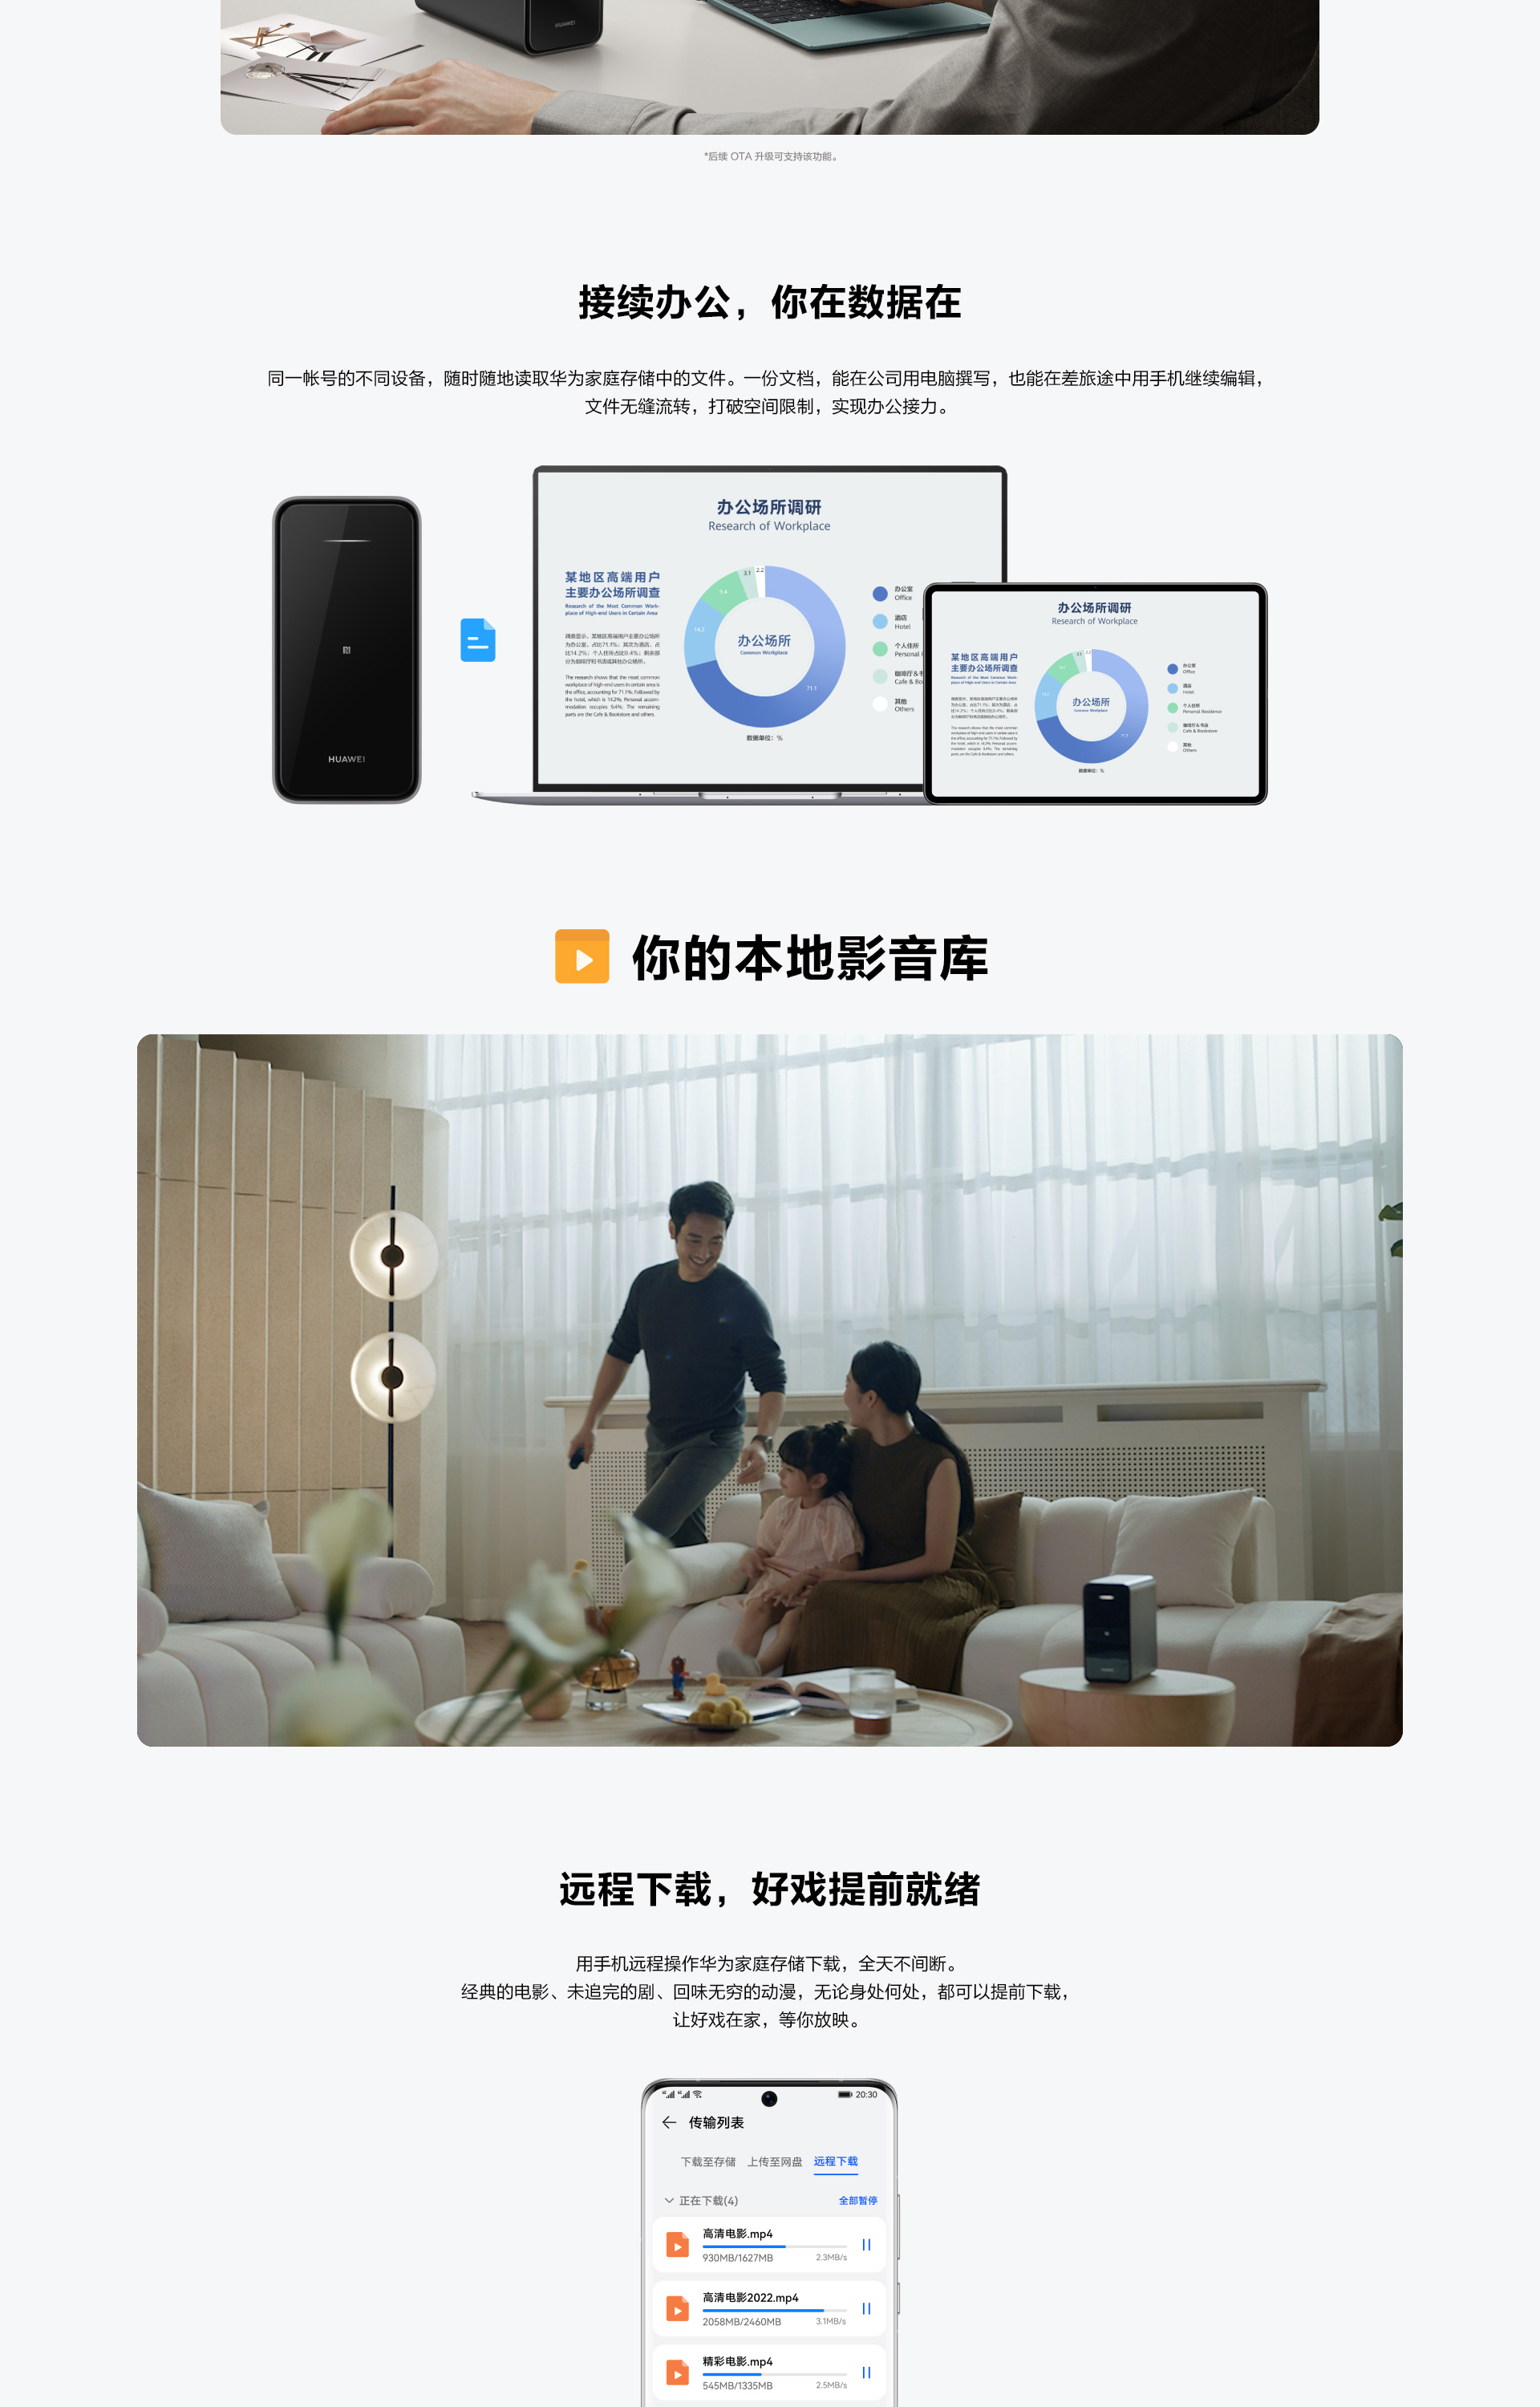 Huawei Family Data Storage